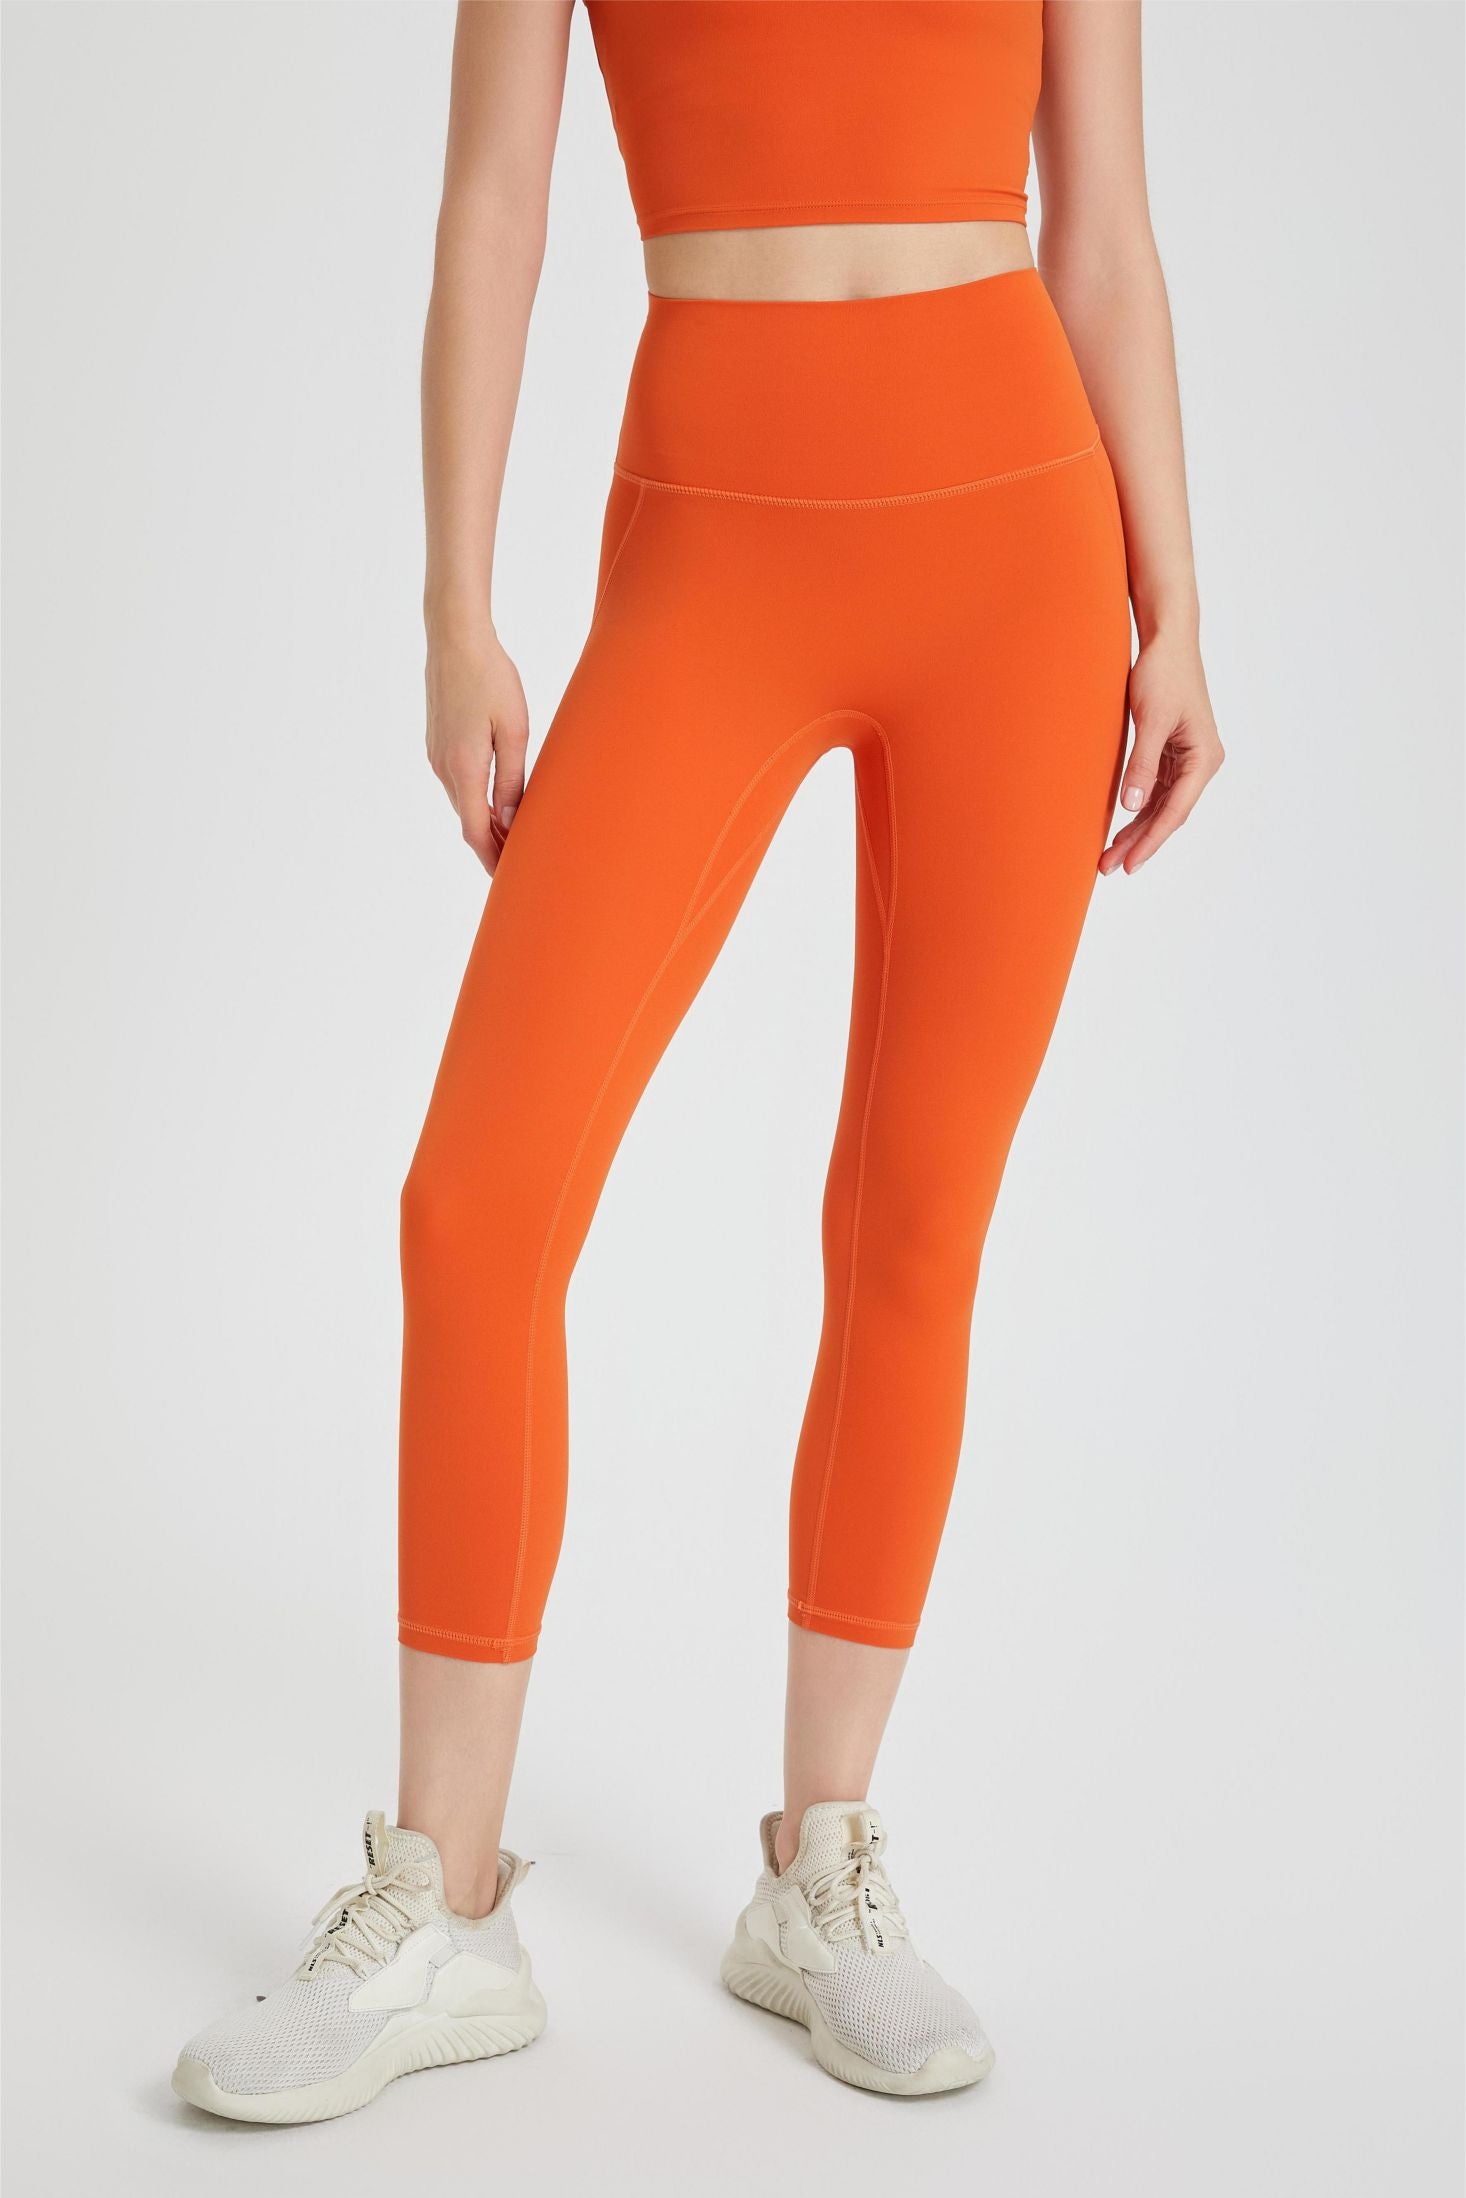 Women's Outrageous Orange Yoga Pants Capri Leggings - High-Quality